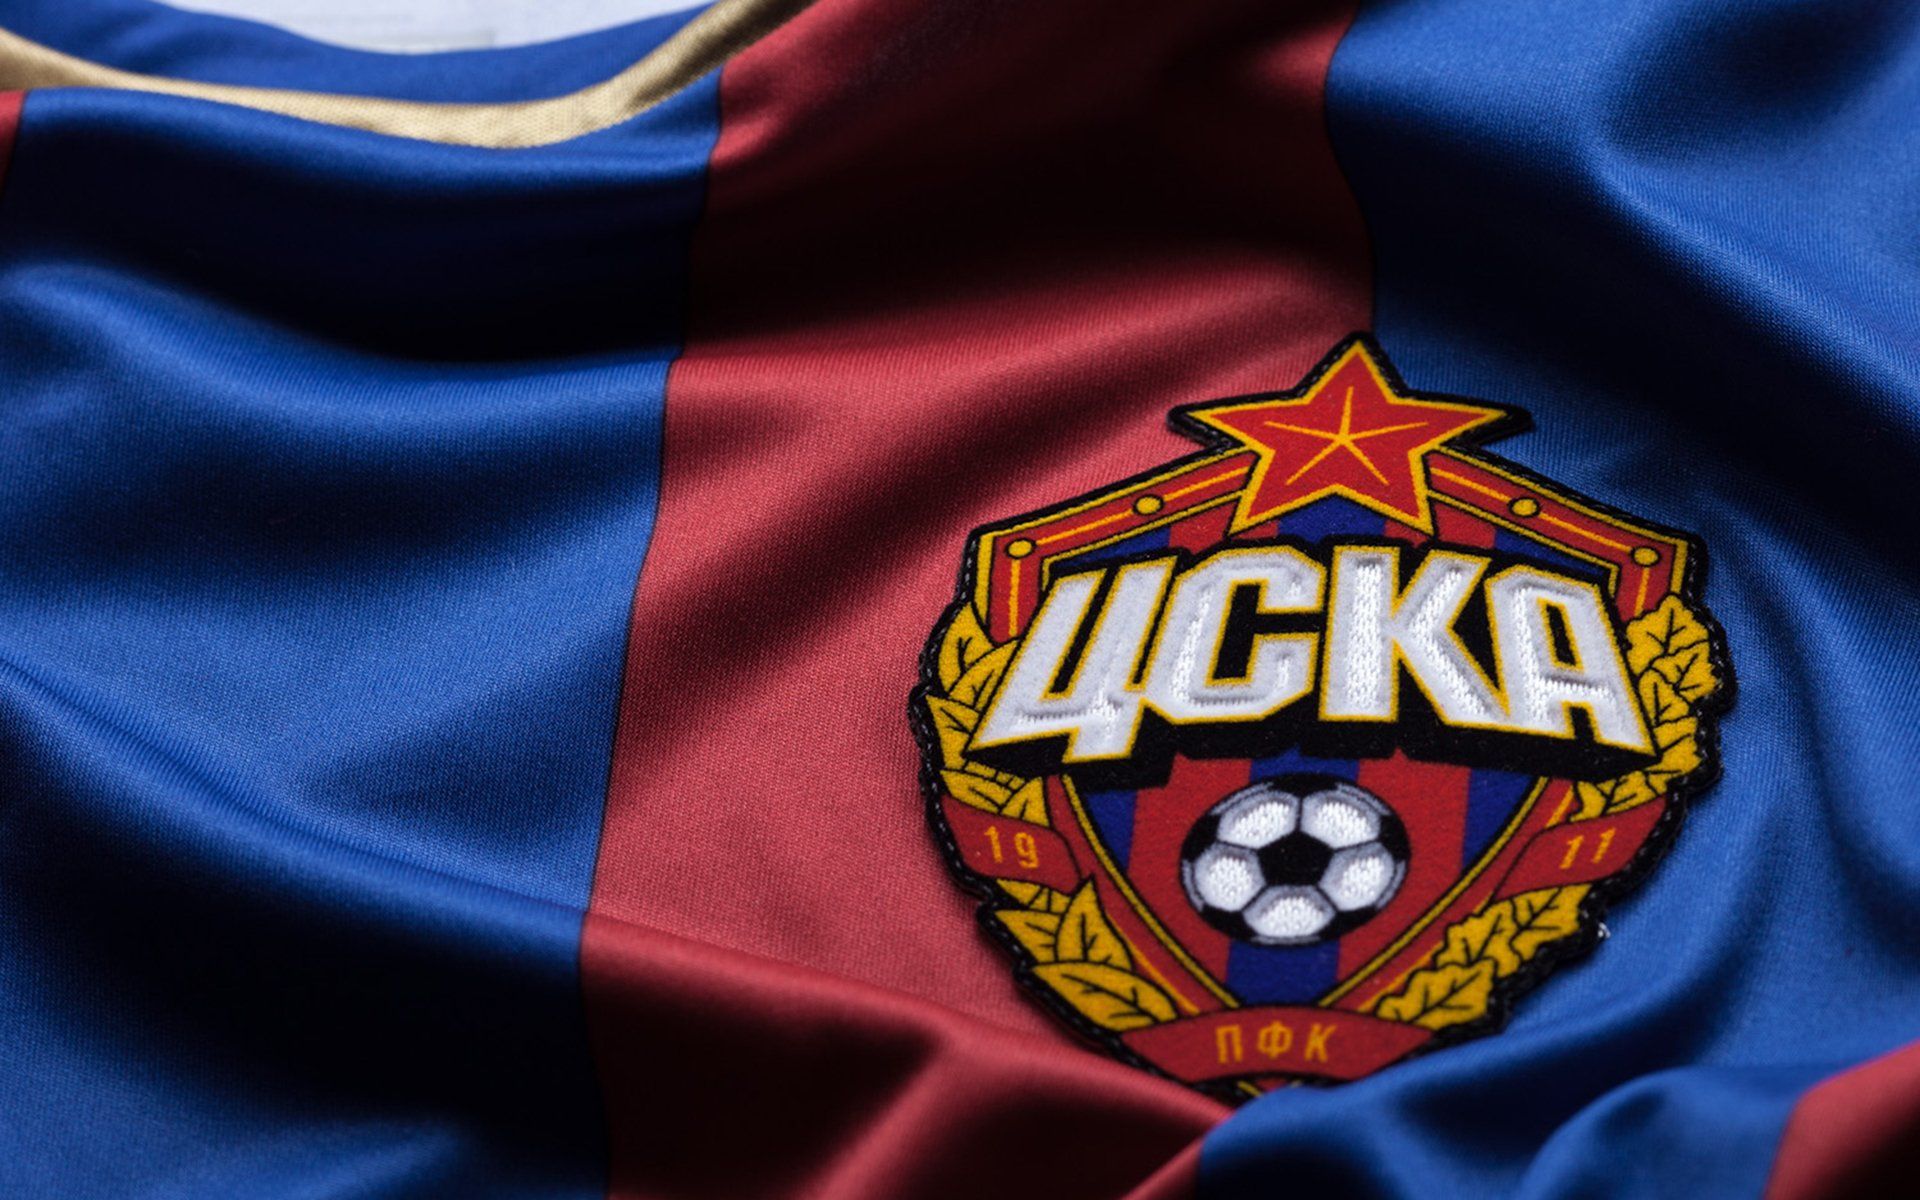 PFC CSKA Moscow HD Wallpaper. Background Imagex1200